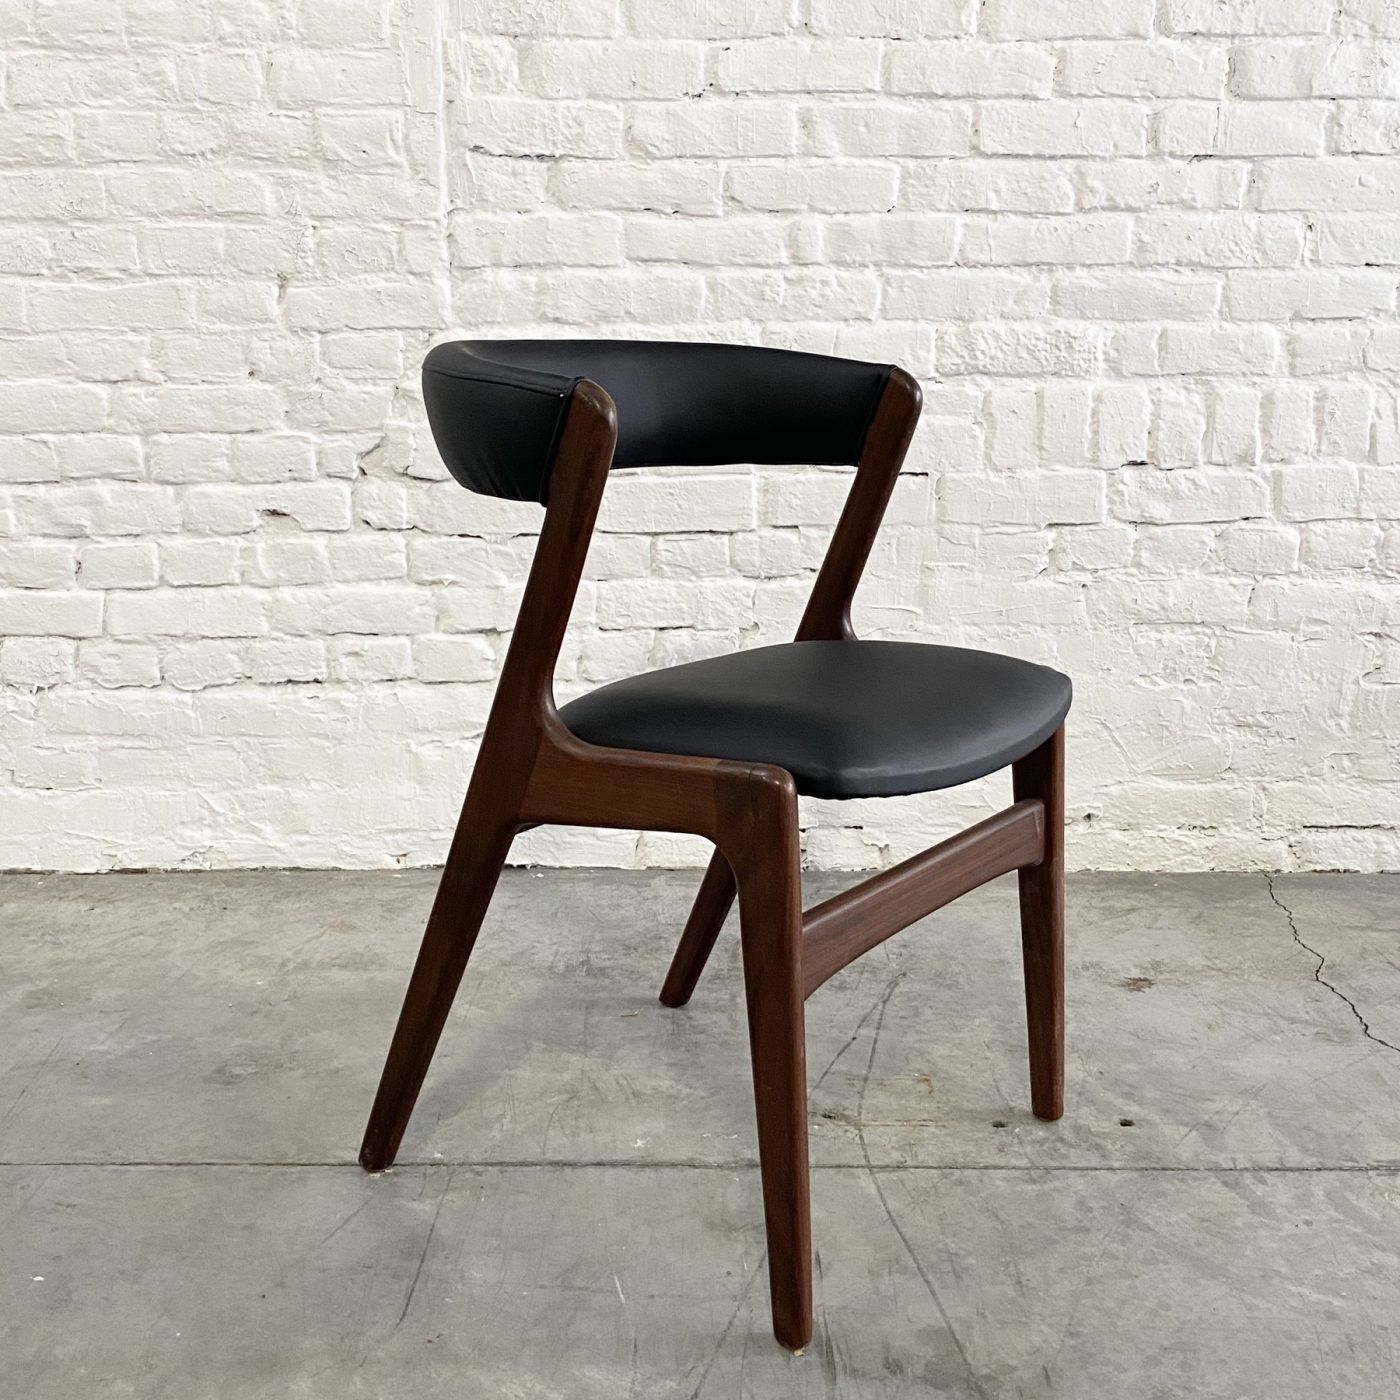 objet-vagabond-danish-chairs0001